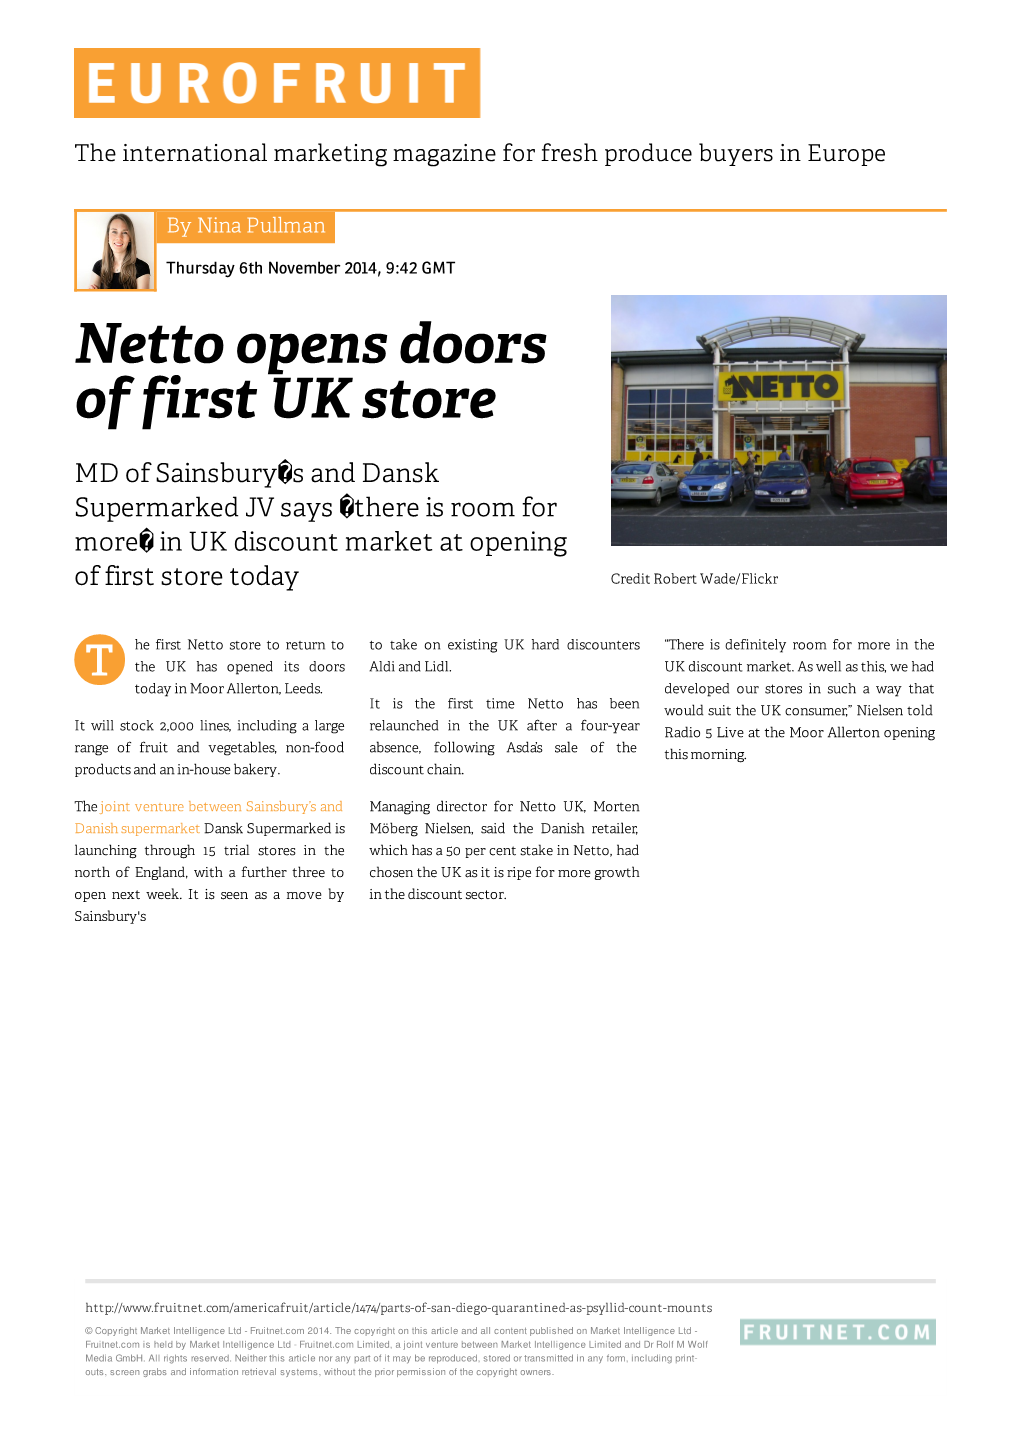 Netto Opens Doors of First UK Store